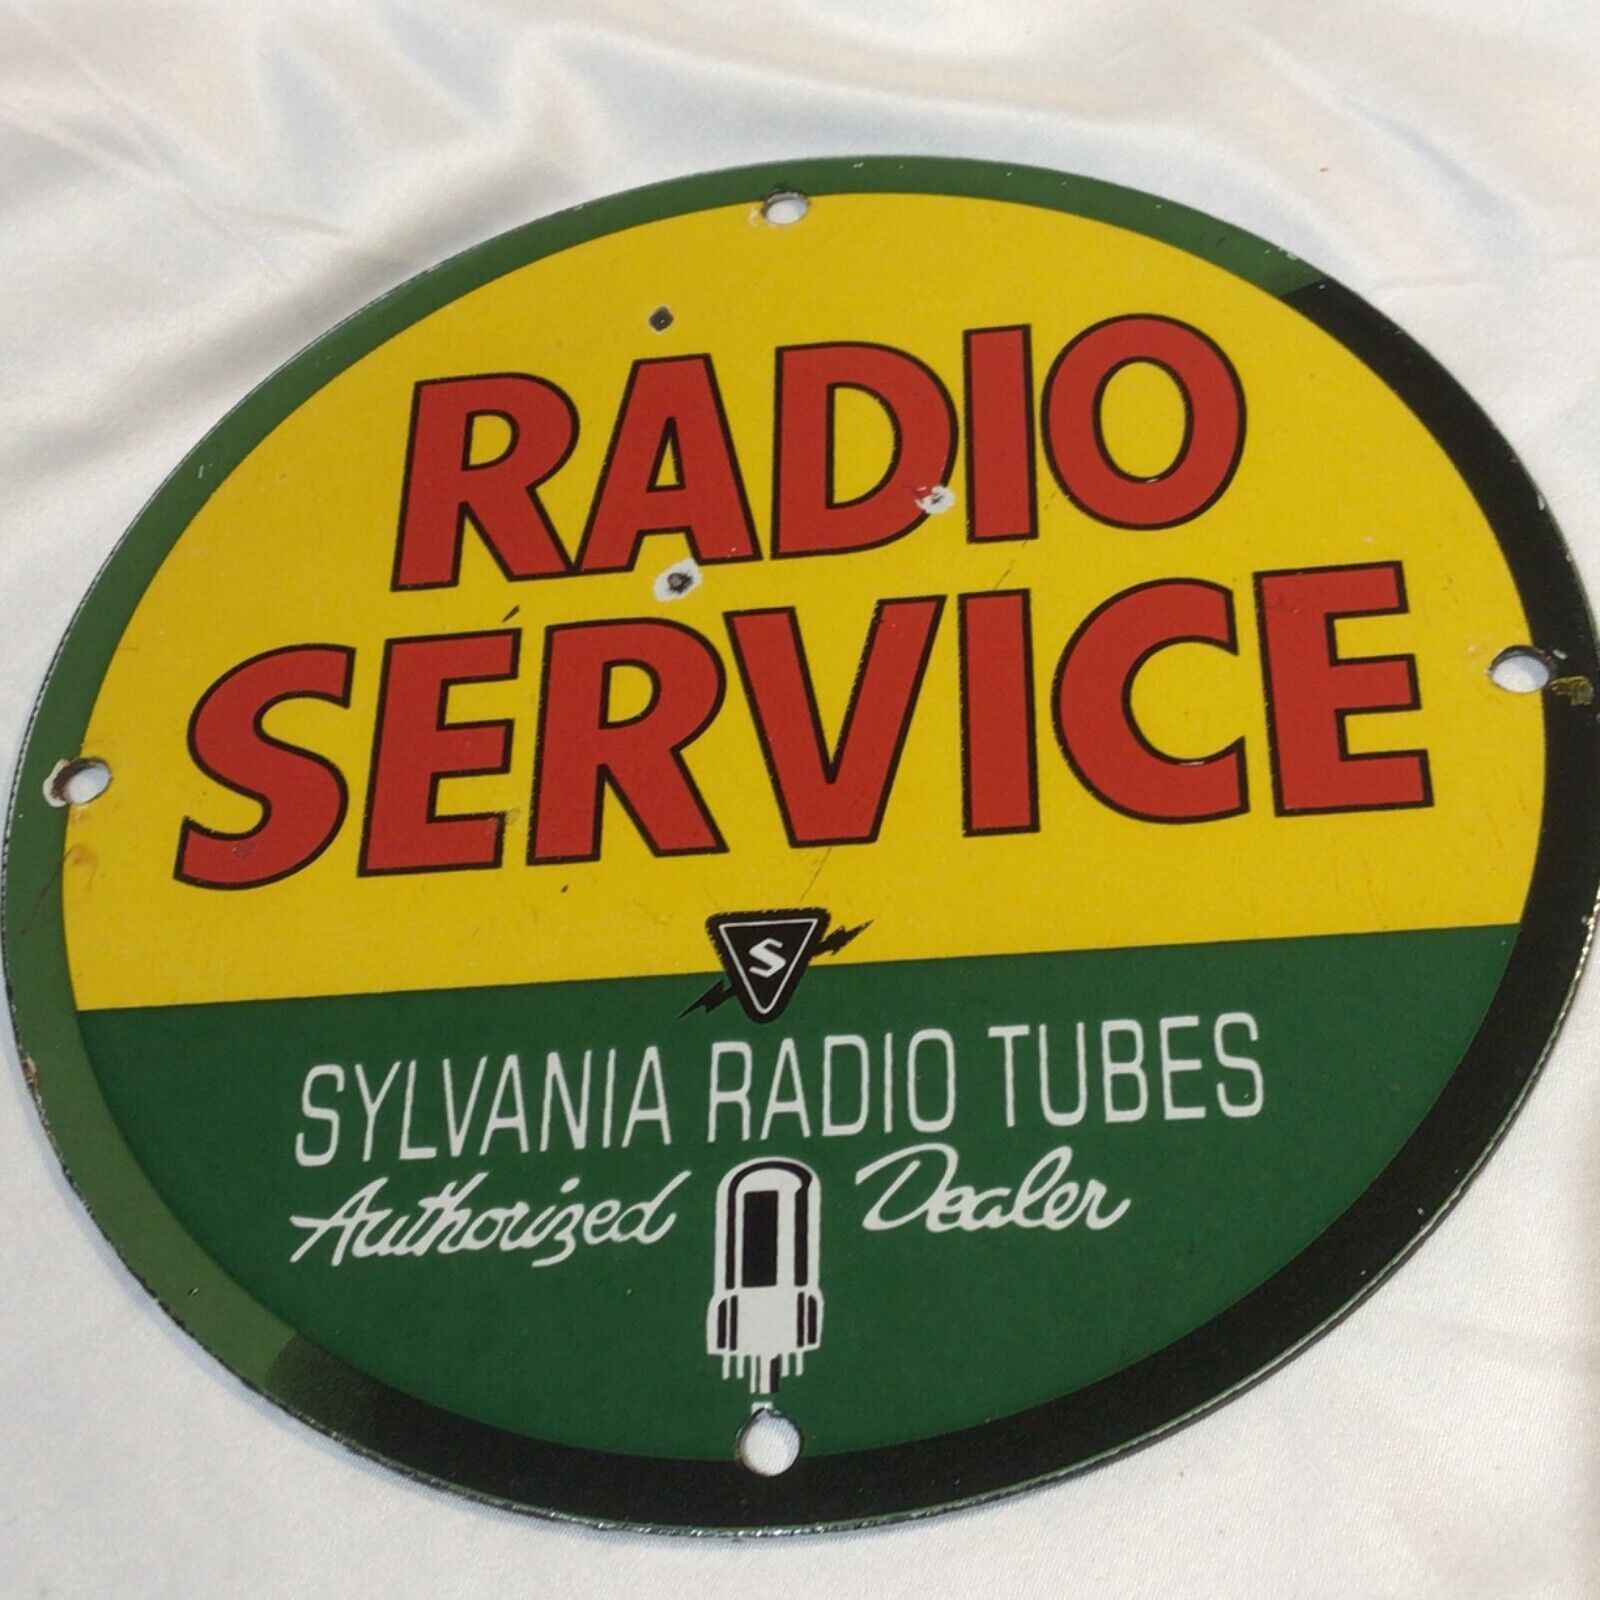 RADIO SERVICE SYLVANIA TUBES Authorized Dealer Porcelain Metal Advertising Sign